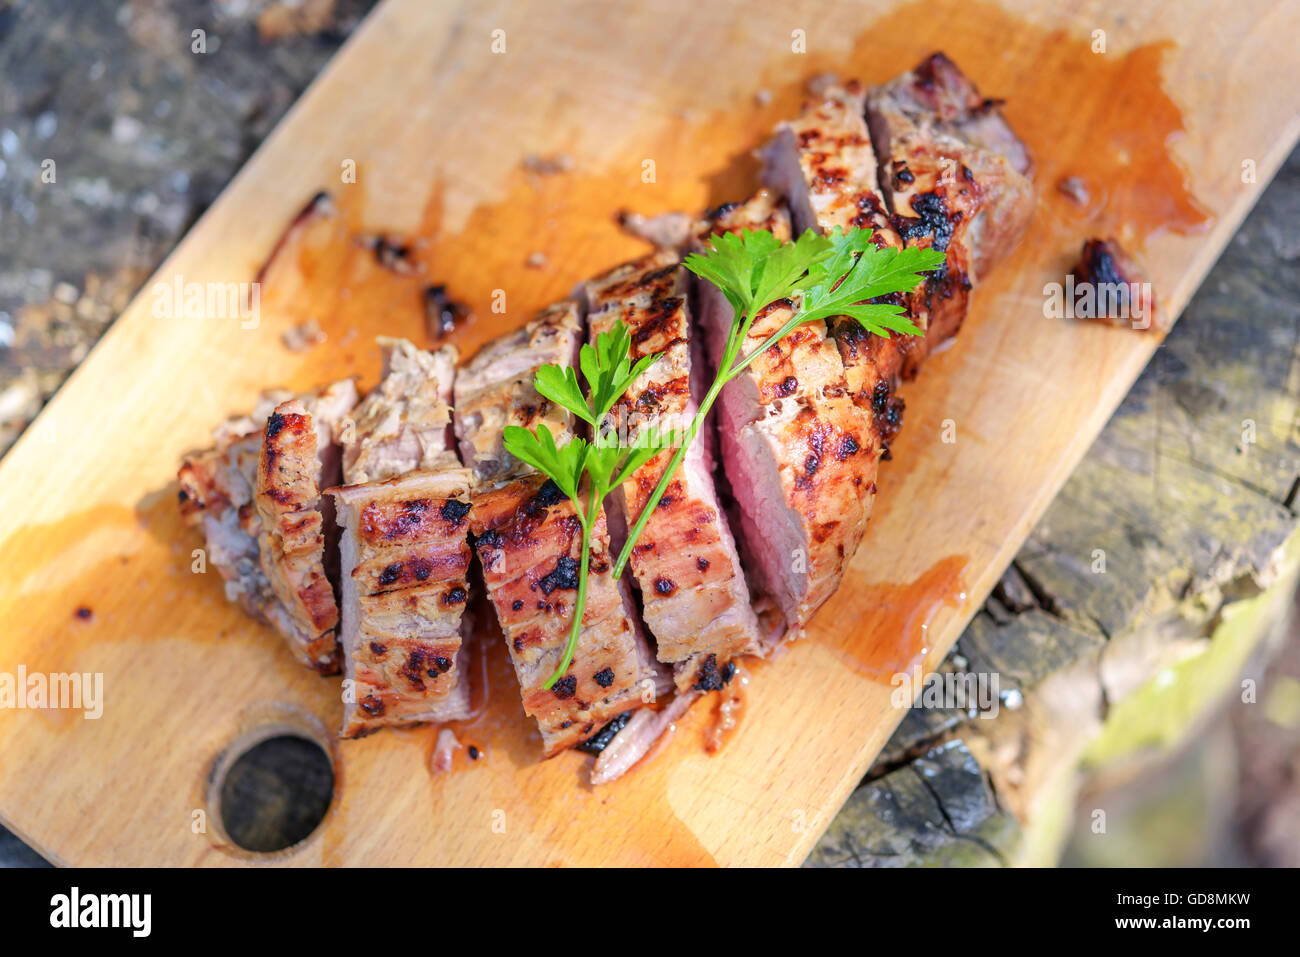 fried pork piece on wood table Stock Photo